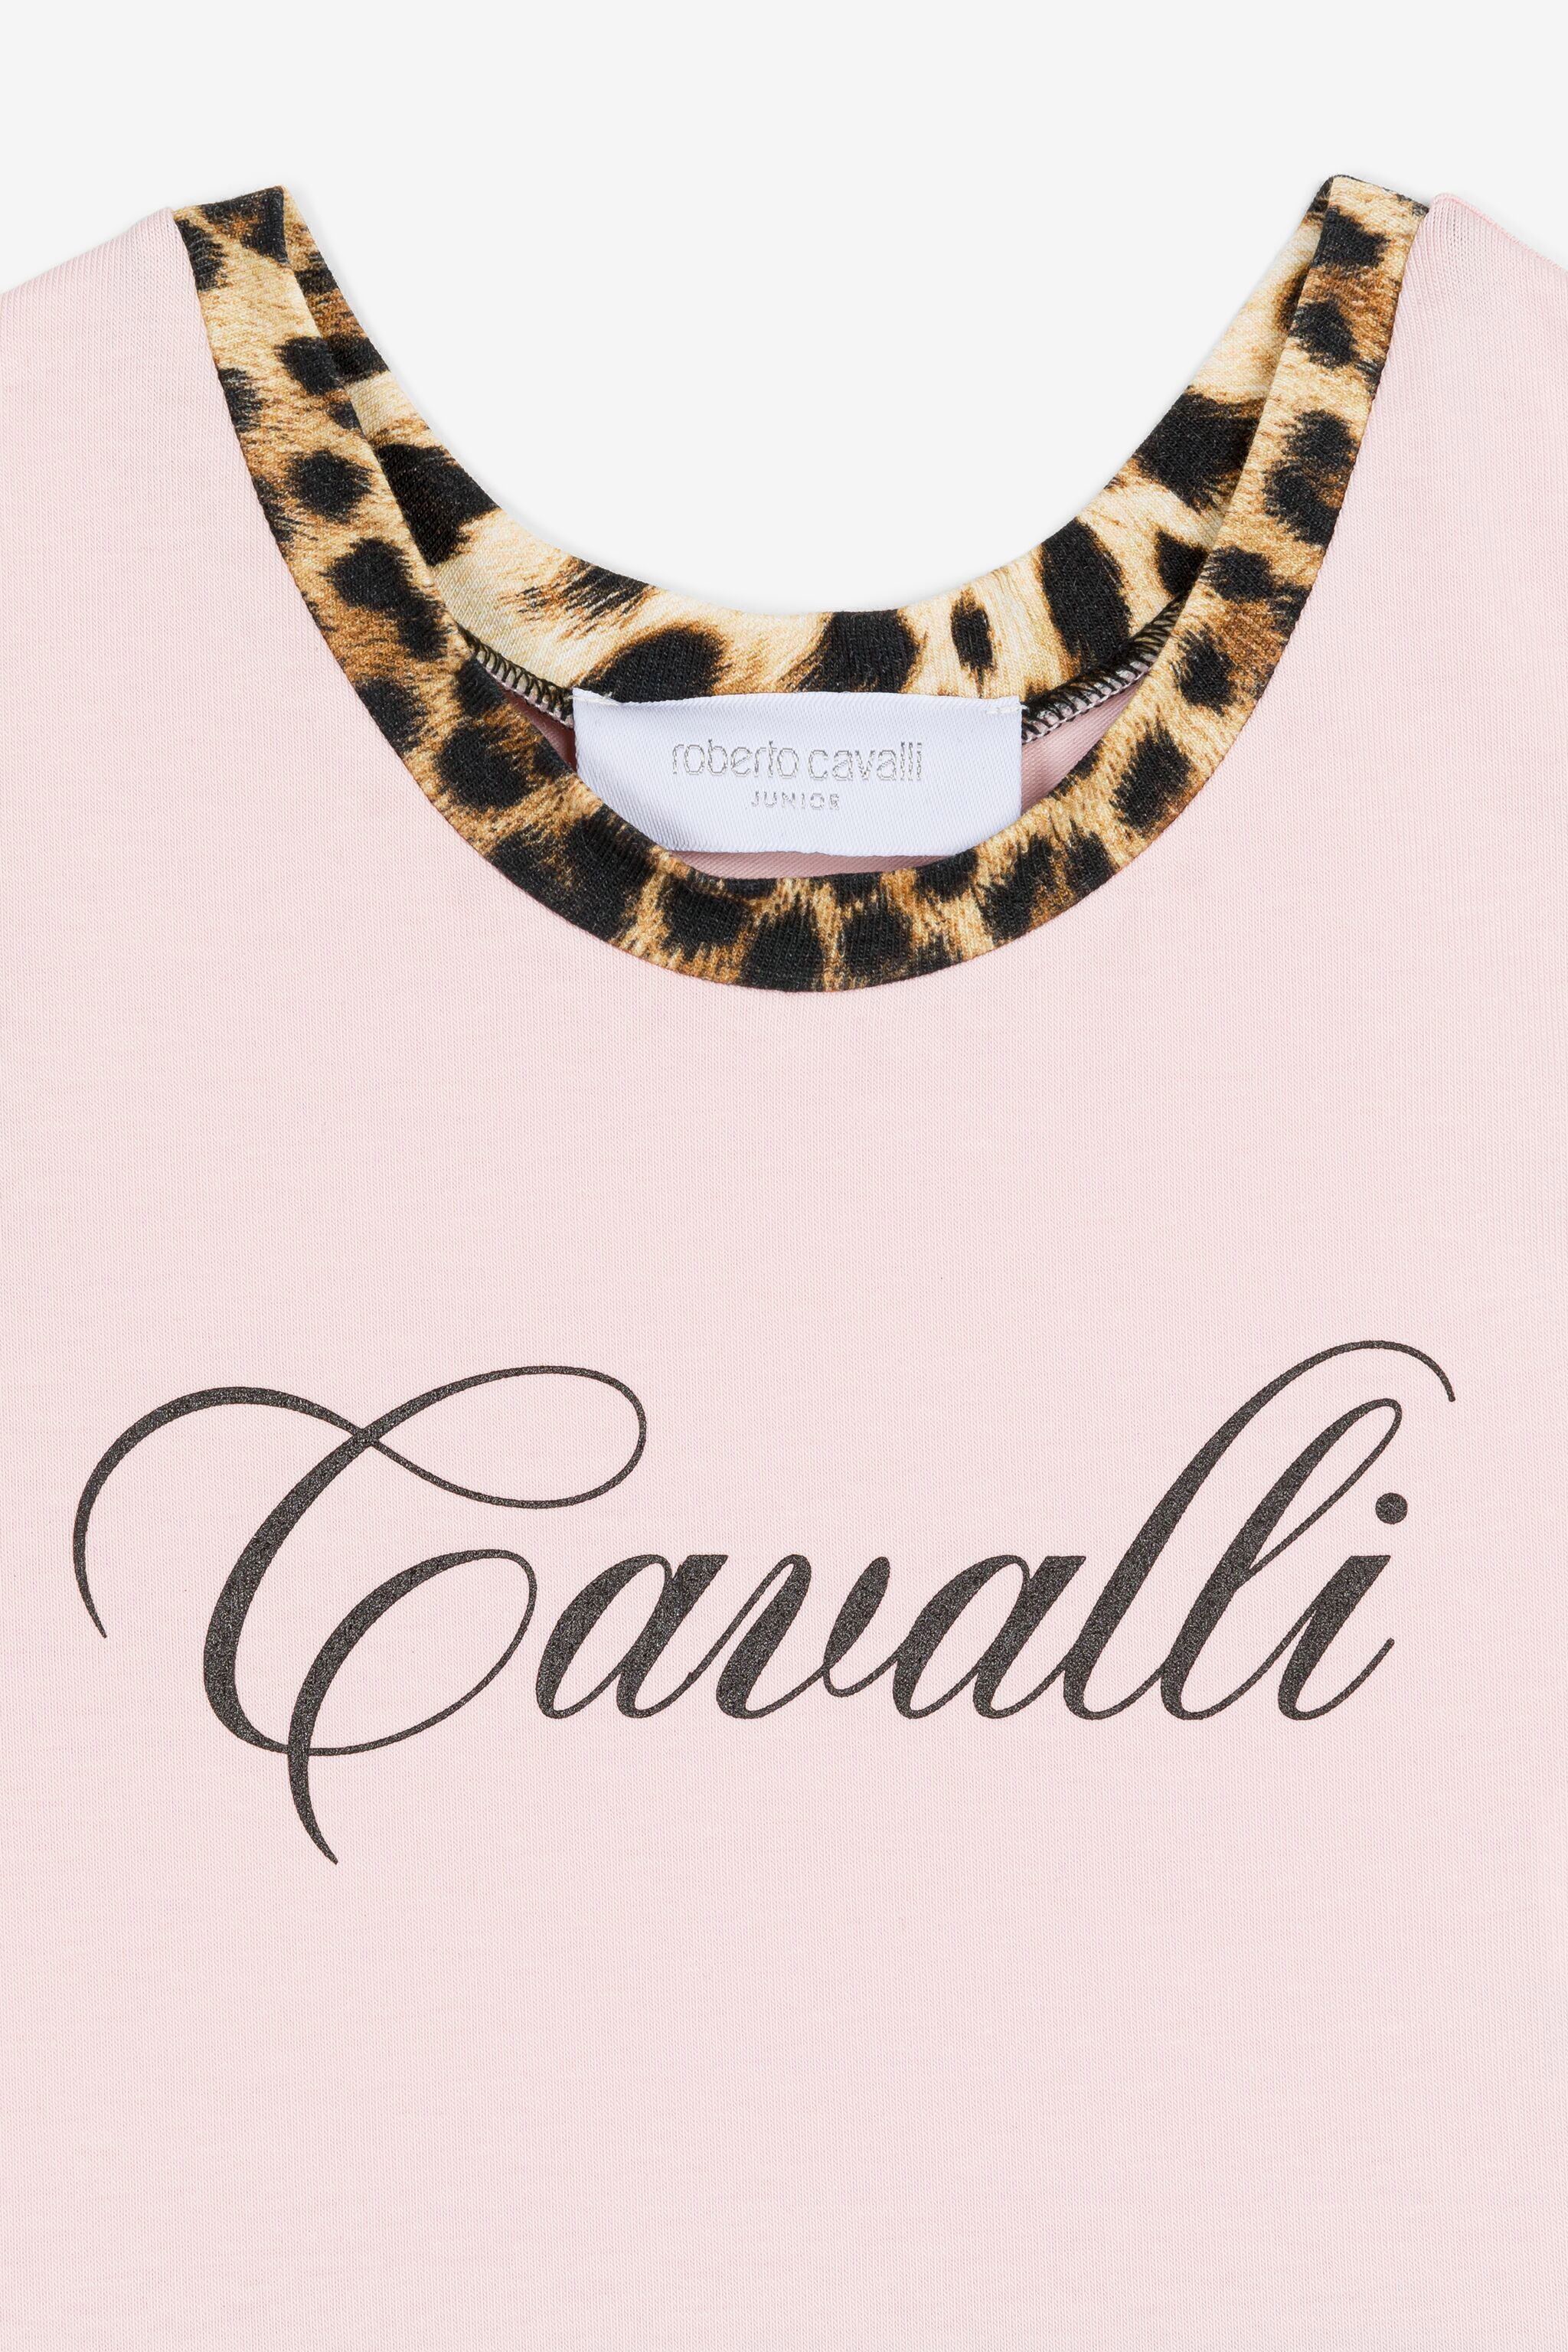 Roberto Cavalli Junior leopard-print T-shirt dress - D2294